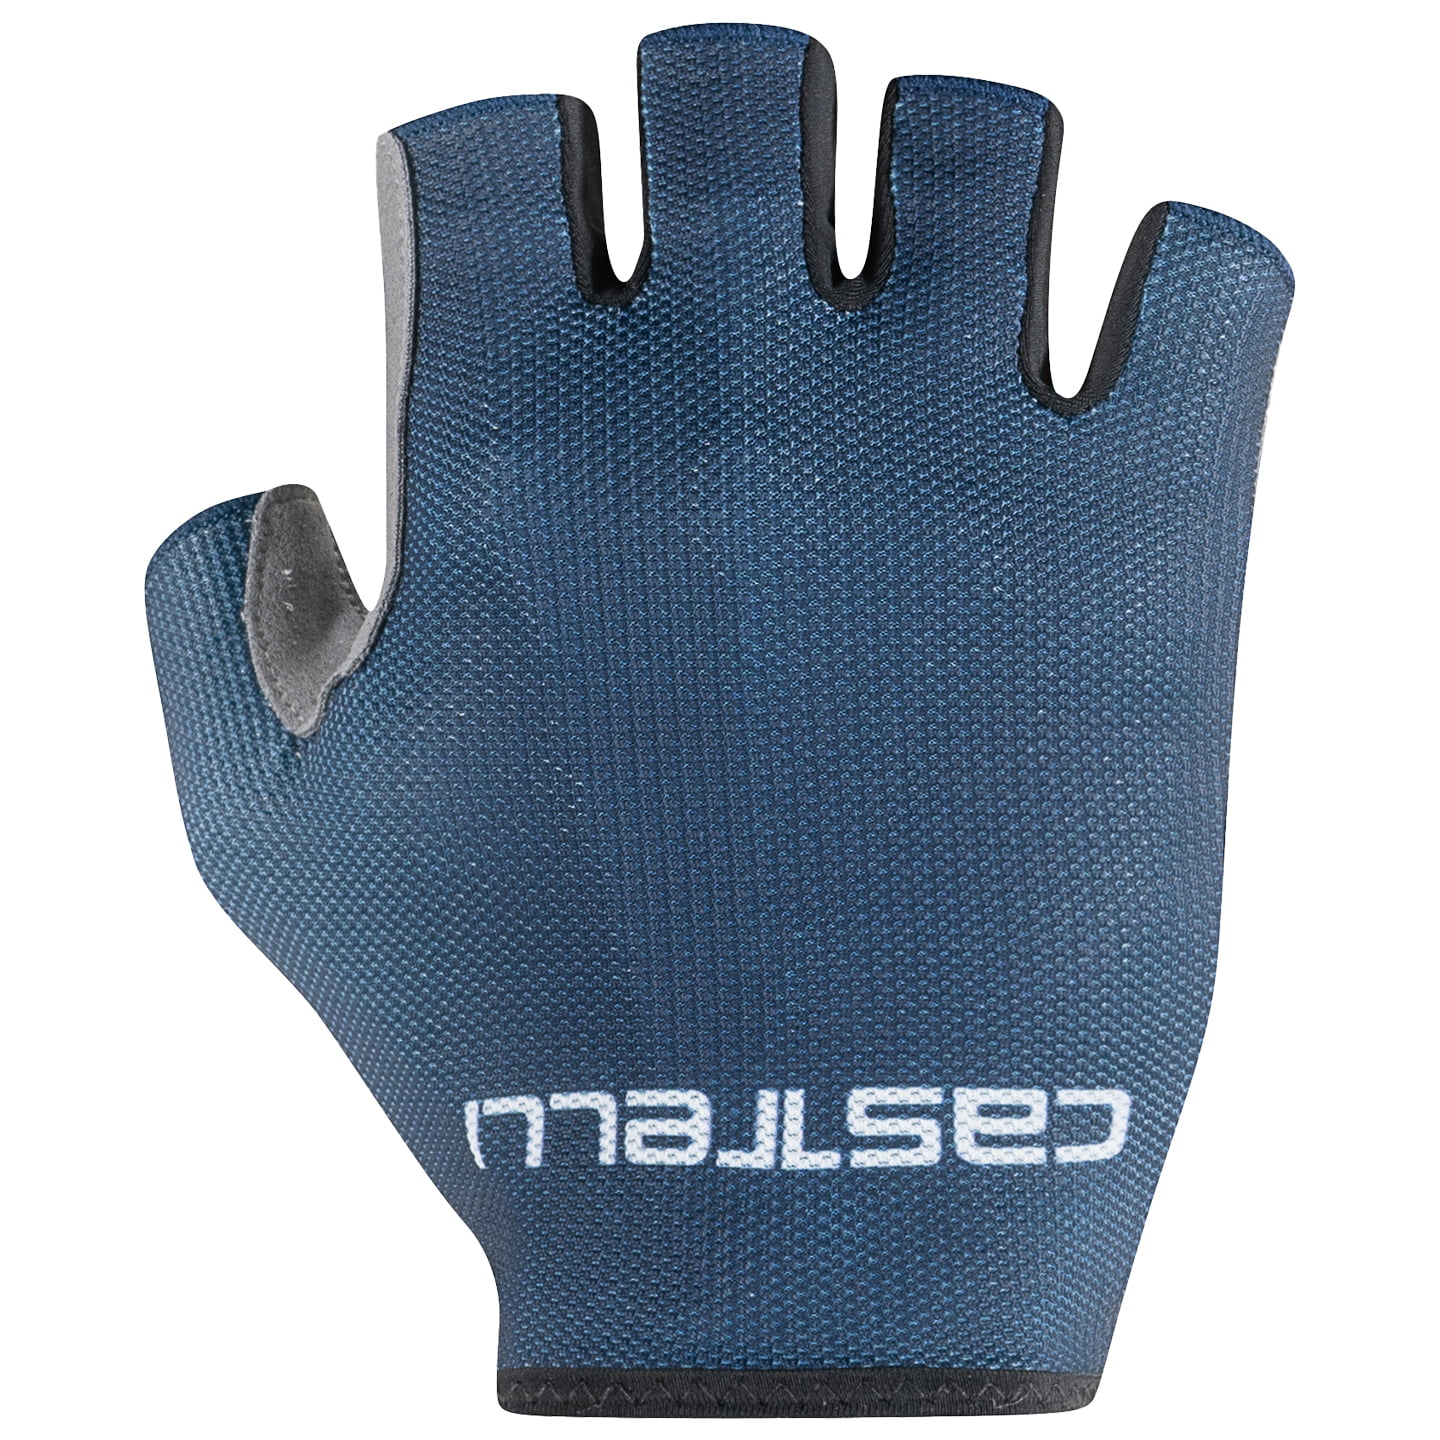 CASTELLI Gloves Superleggera Cycling Gloves, for men, size S, Cycling gloves, Cycling clothing